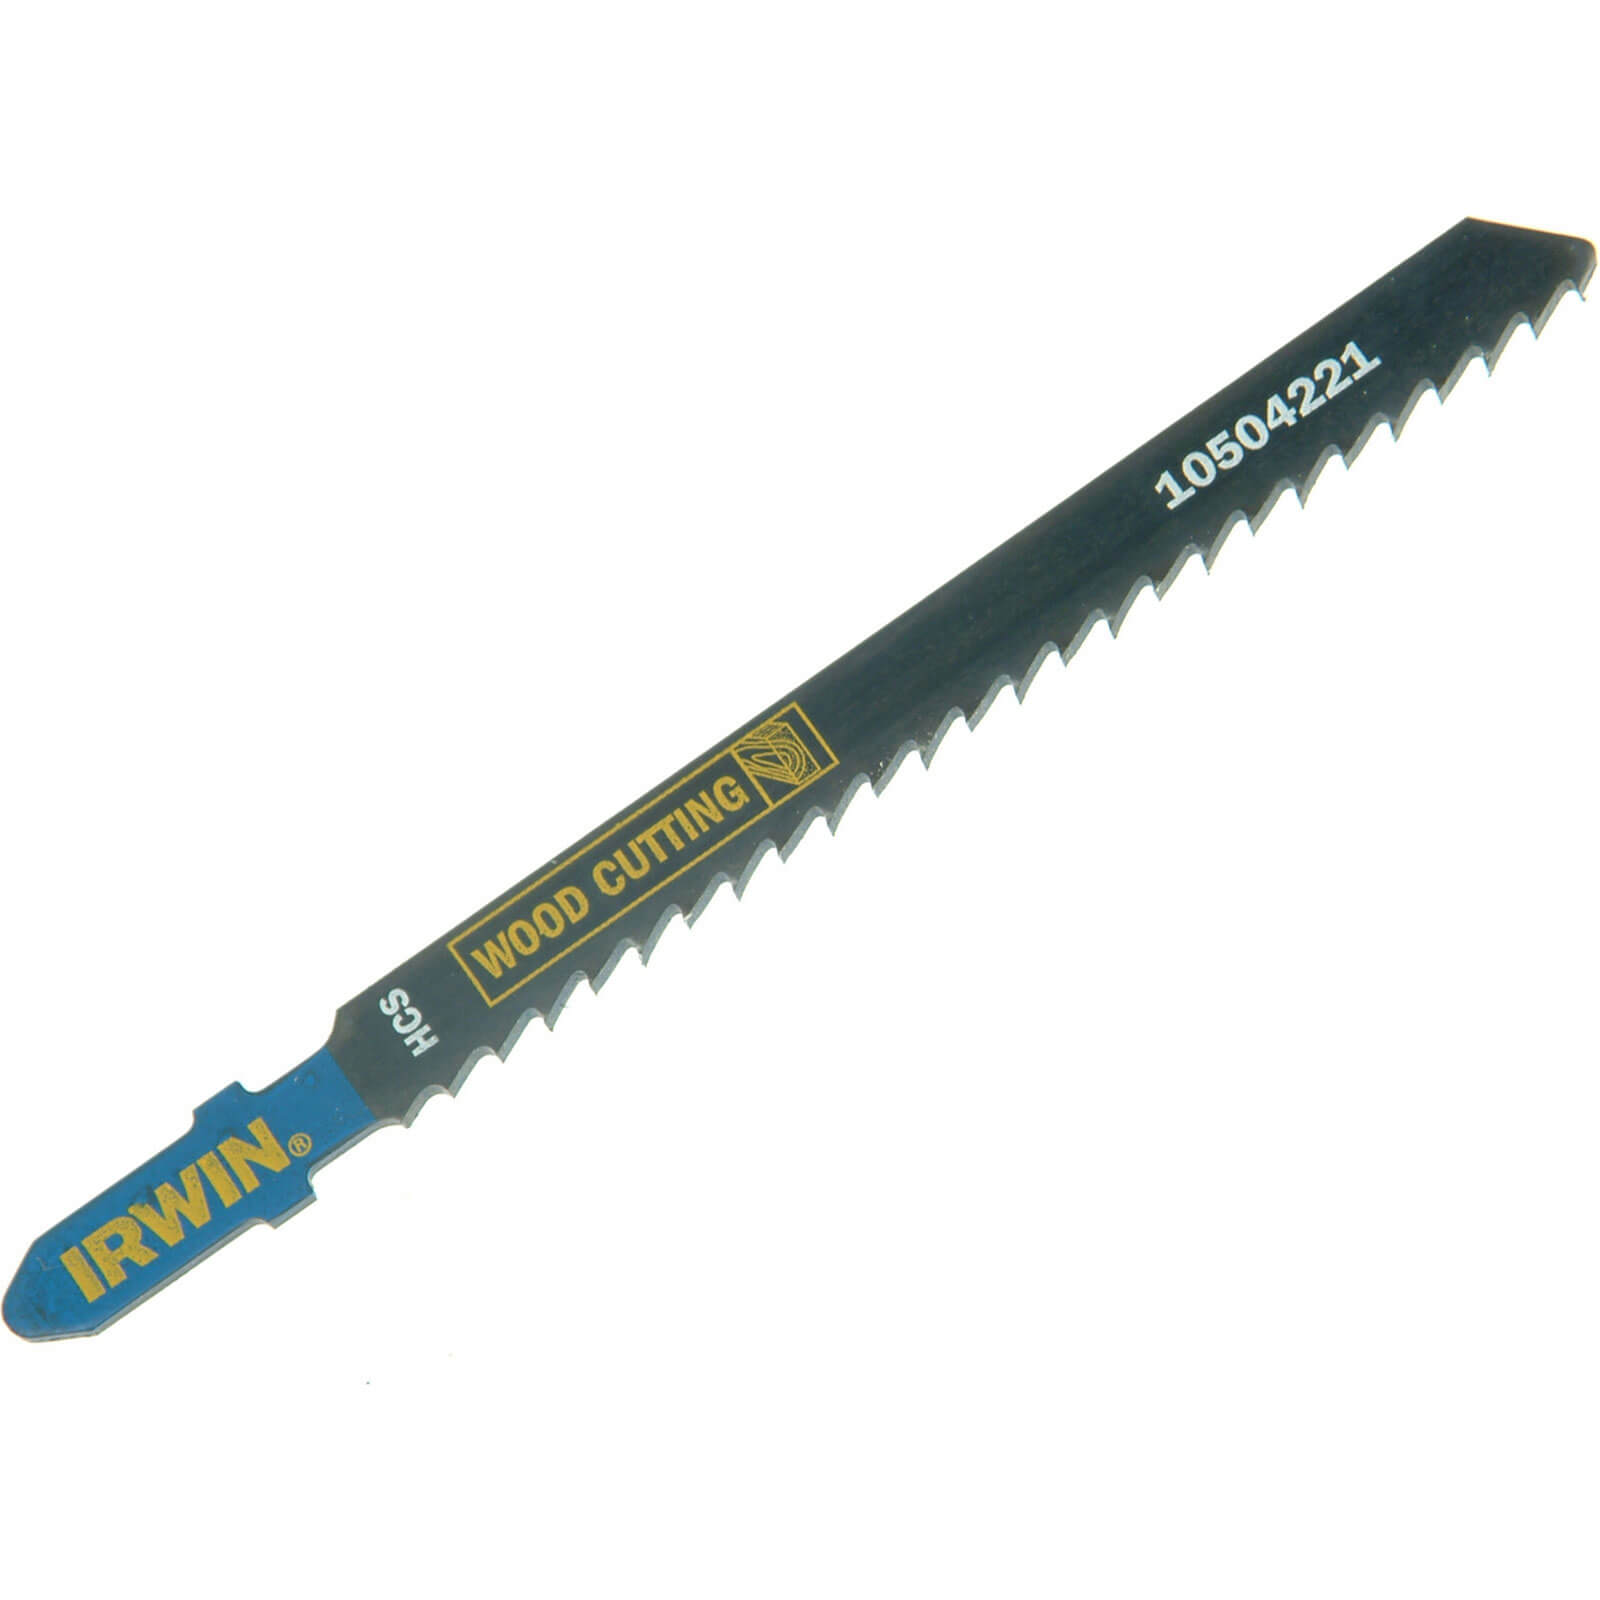 Photos - Power Tool Accessory IRWIN T119BO T Shank Wood Cutting Jigsaw Blades Pack of 5 IRW10504227 